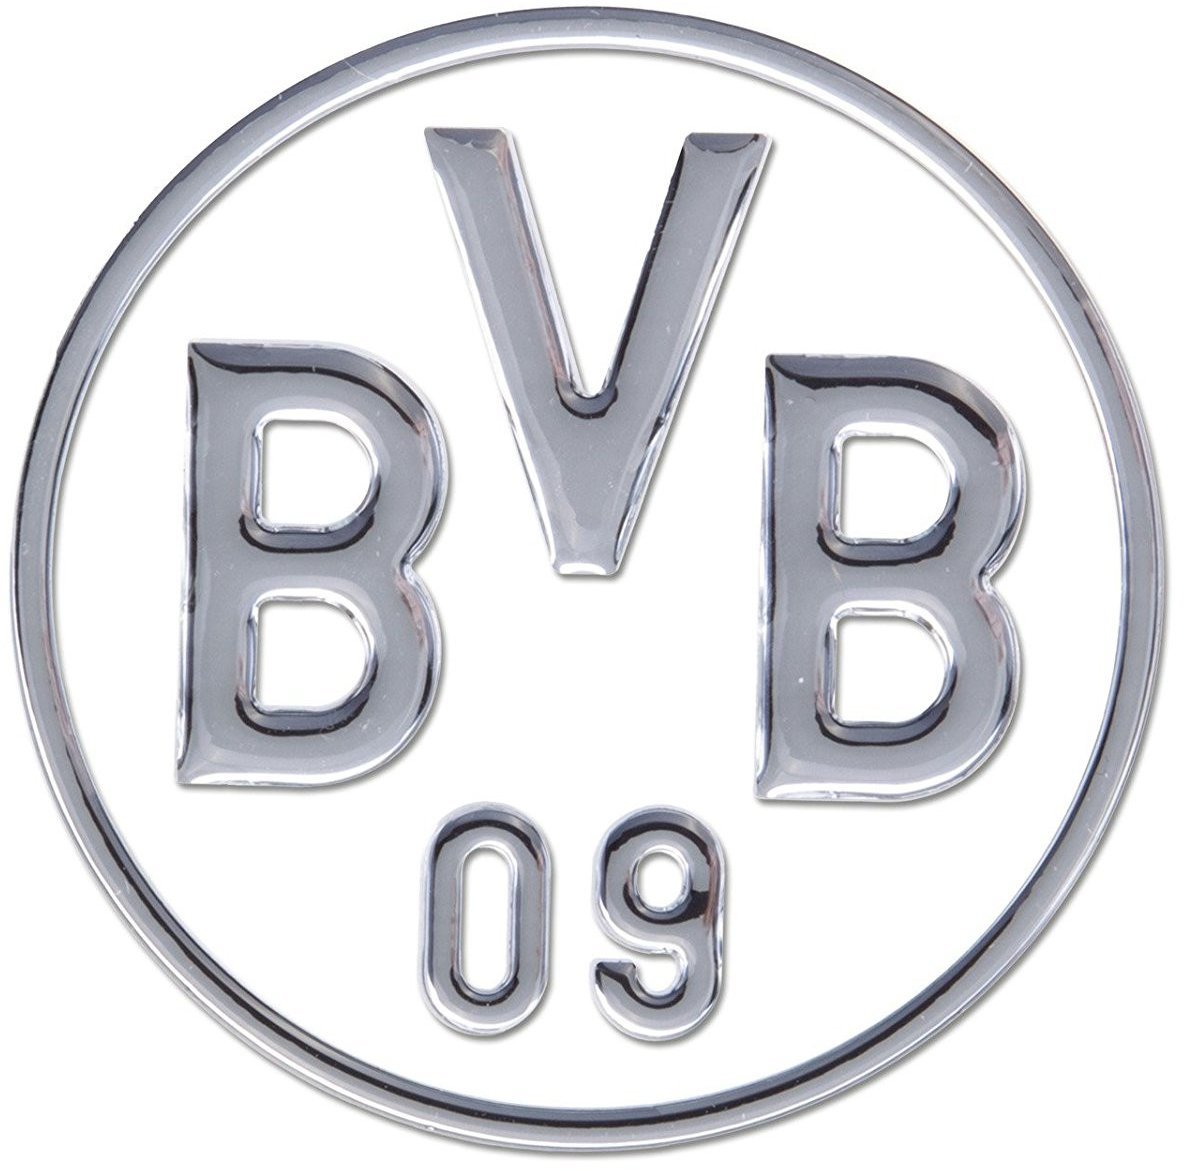 Aufkleber plus 1x gratis Aufkleber forever Dortmund Borussia Dortmund Aufkleberbogen Sticker 12er Set